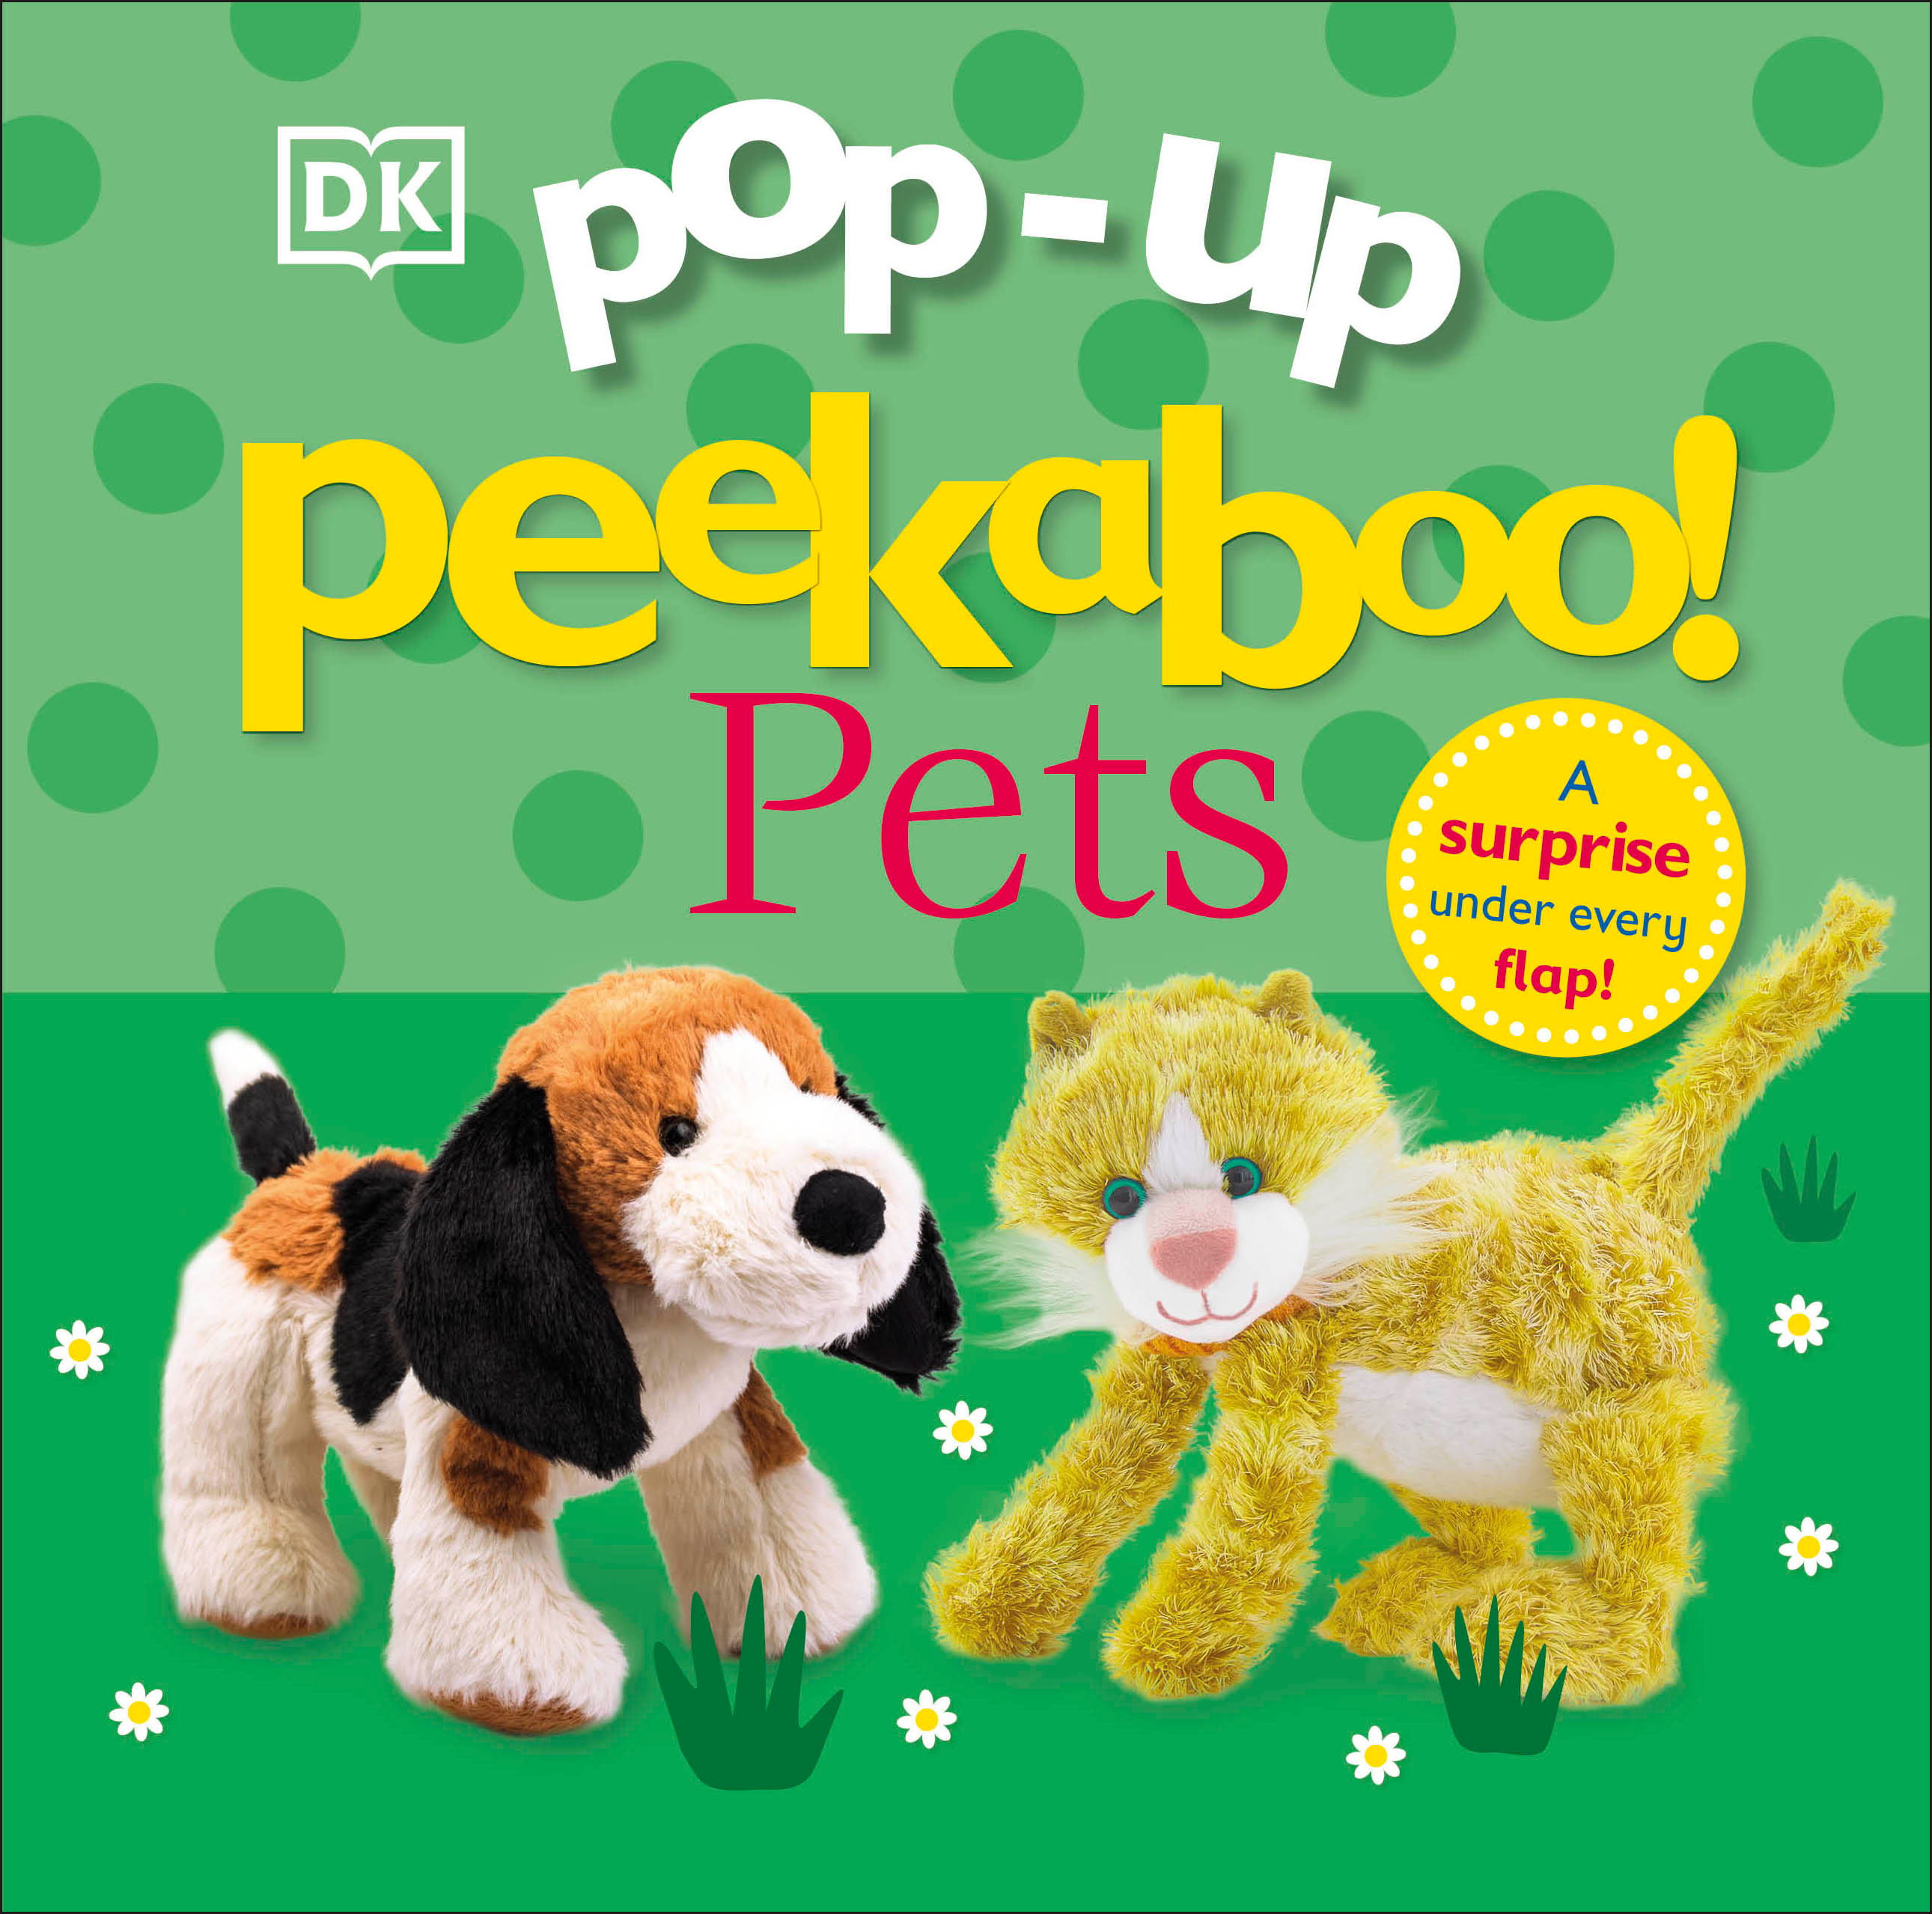 Pop-Up Peekaboo! Pets | 